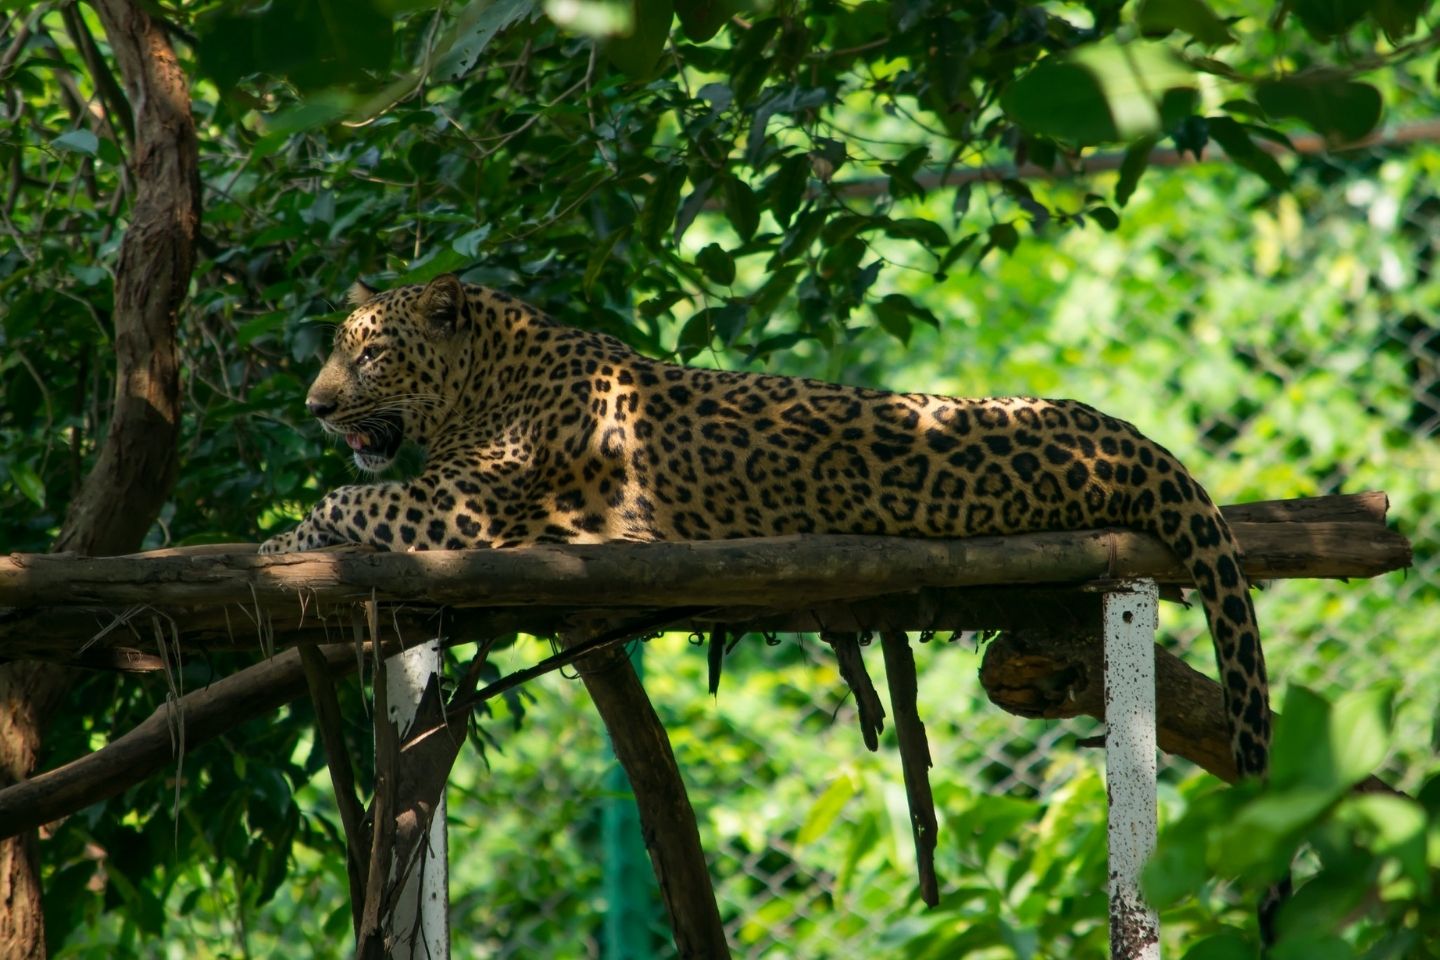 Nandankanan Zoological Park, Bhubaneswar